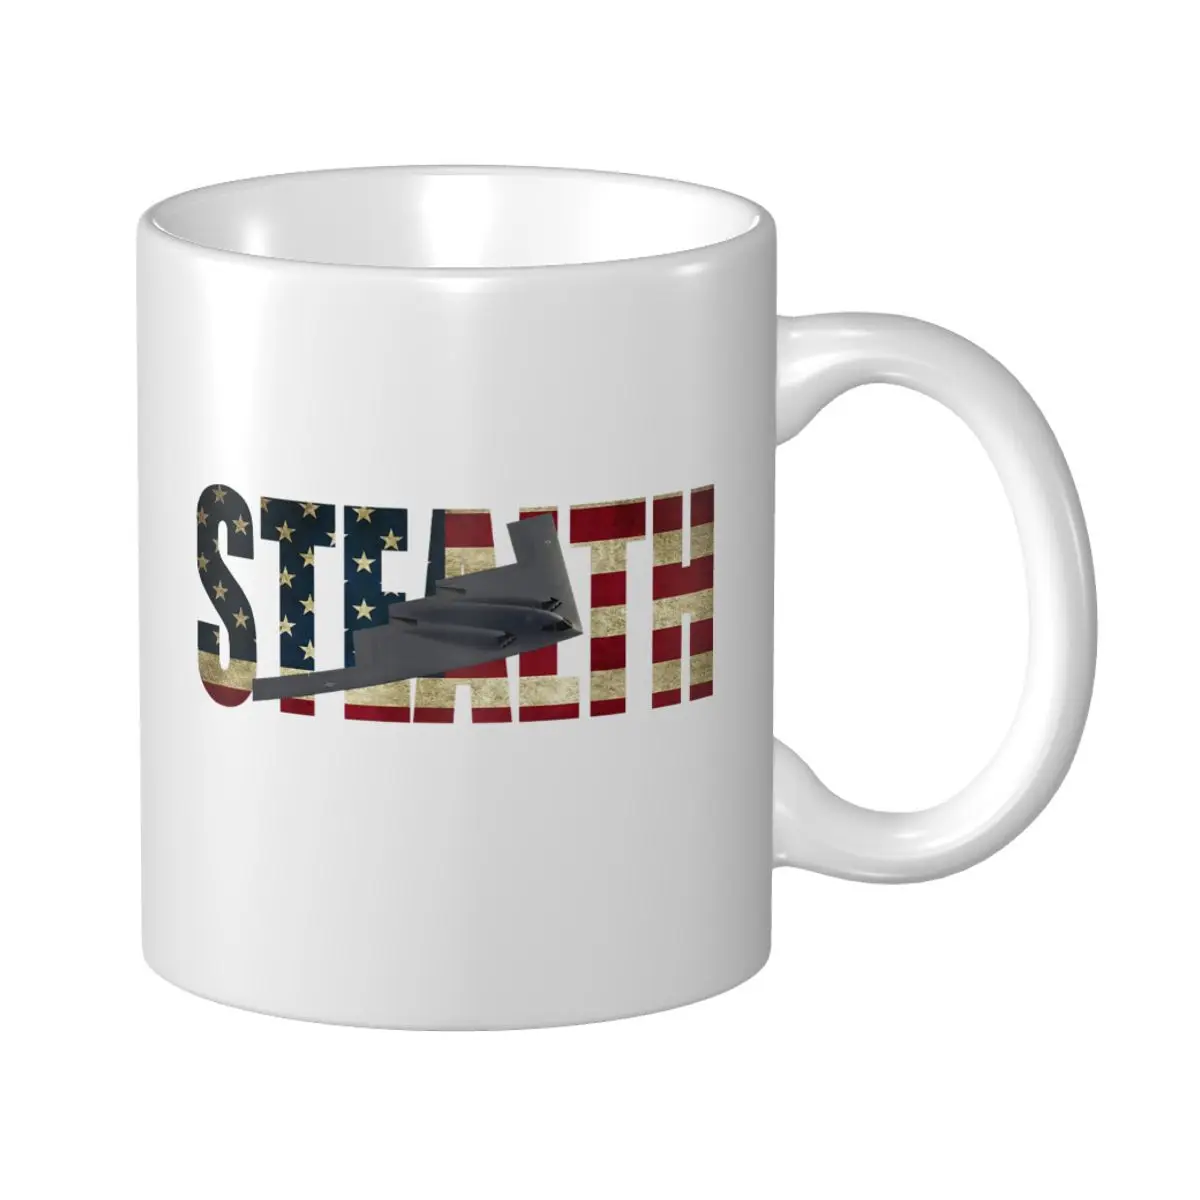 

B-2 Spirit Coffe Mug Solid color Mugs Personality Ceramic Mugs Eco Friendly Tea Cup 330ml (11oz)